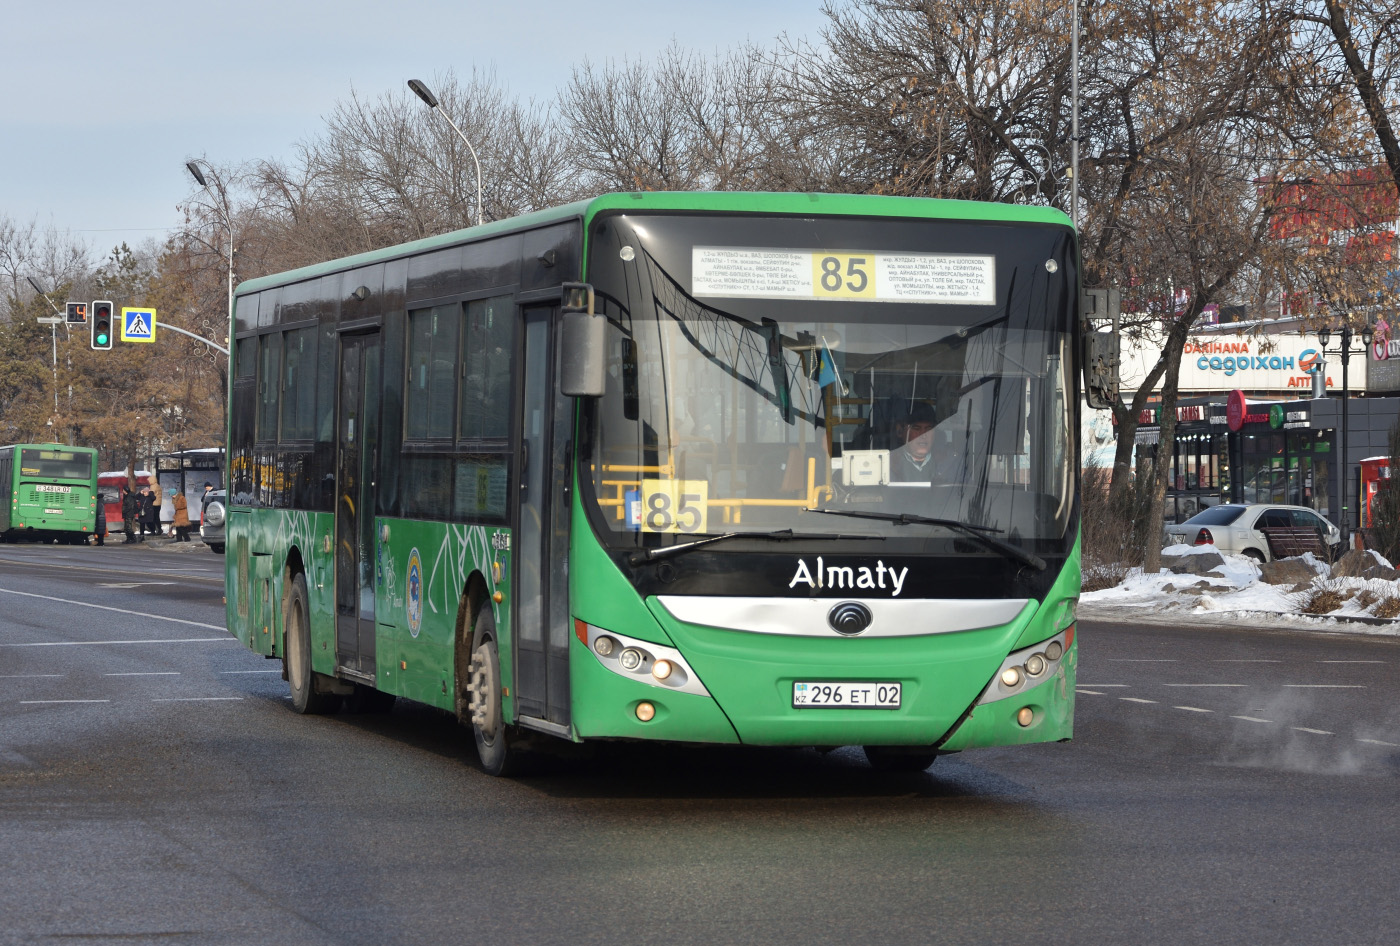 Almaty, Yutong ZK6118HGA No. 296 ET 02